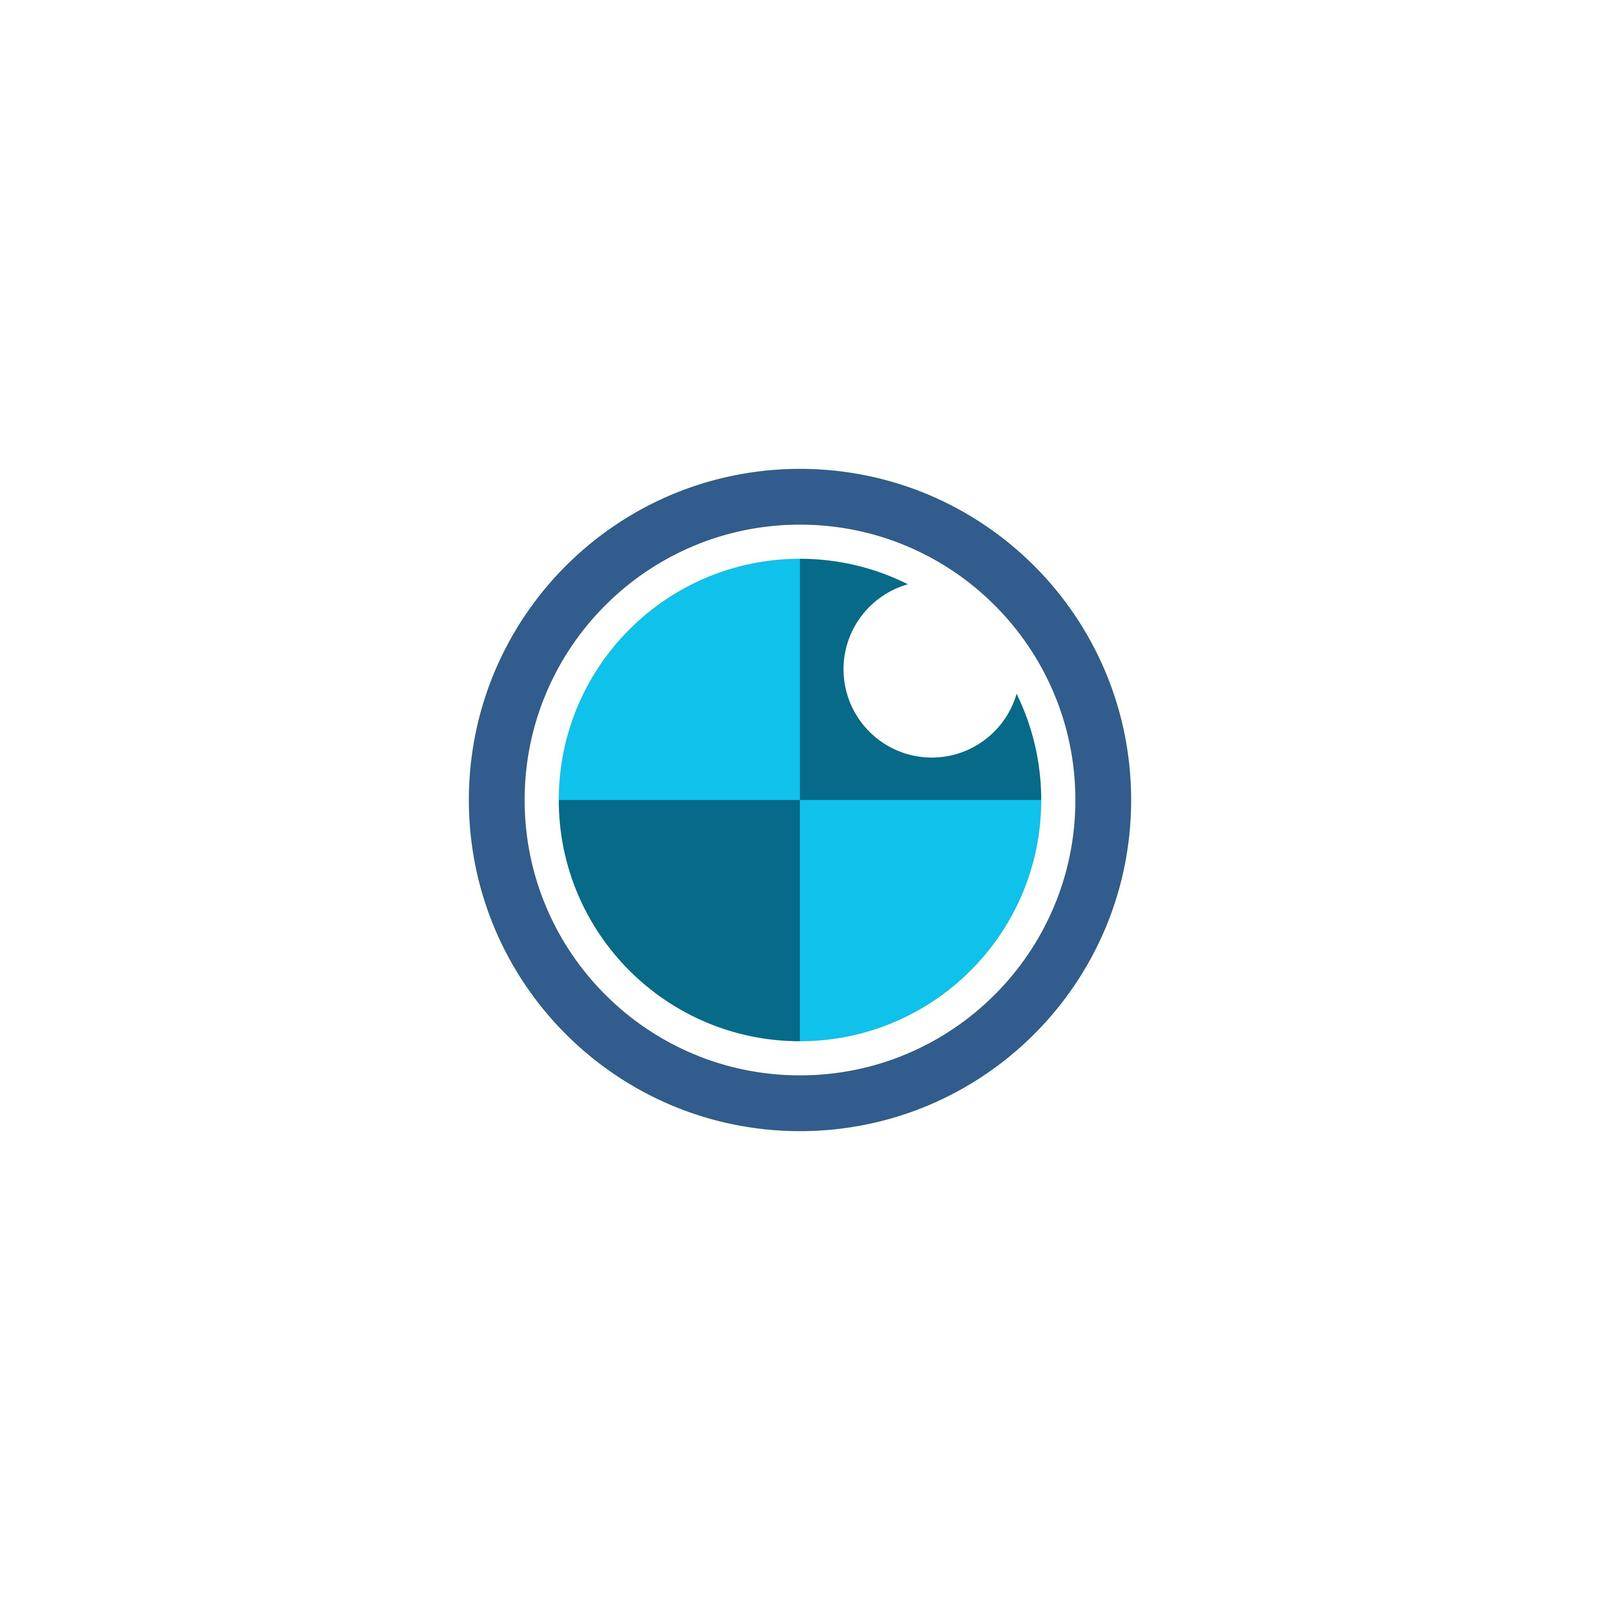 Eye vector logo design image by Mrsongrphc